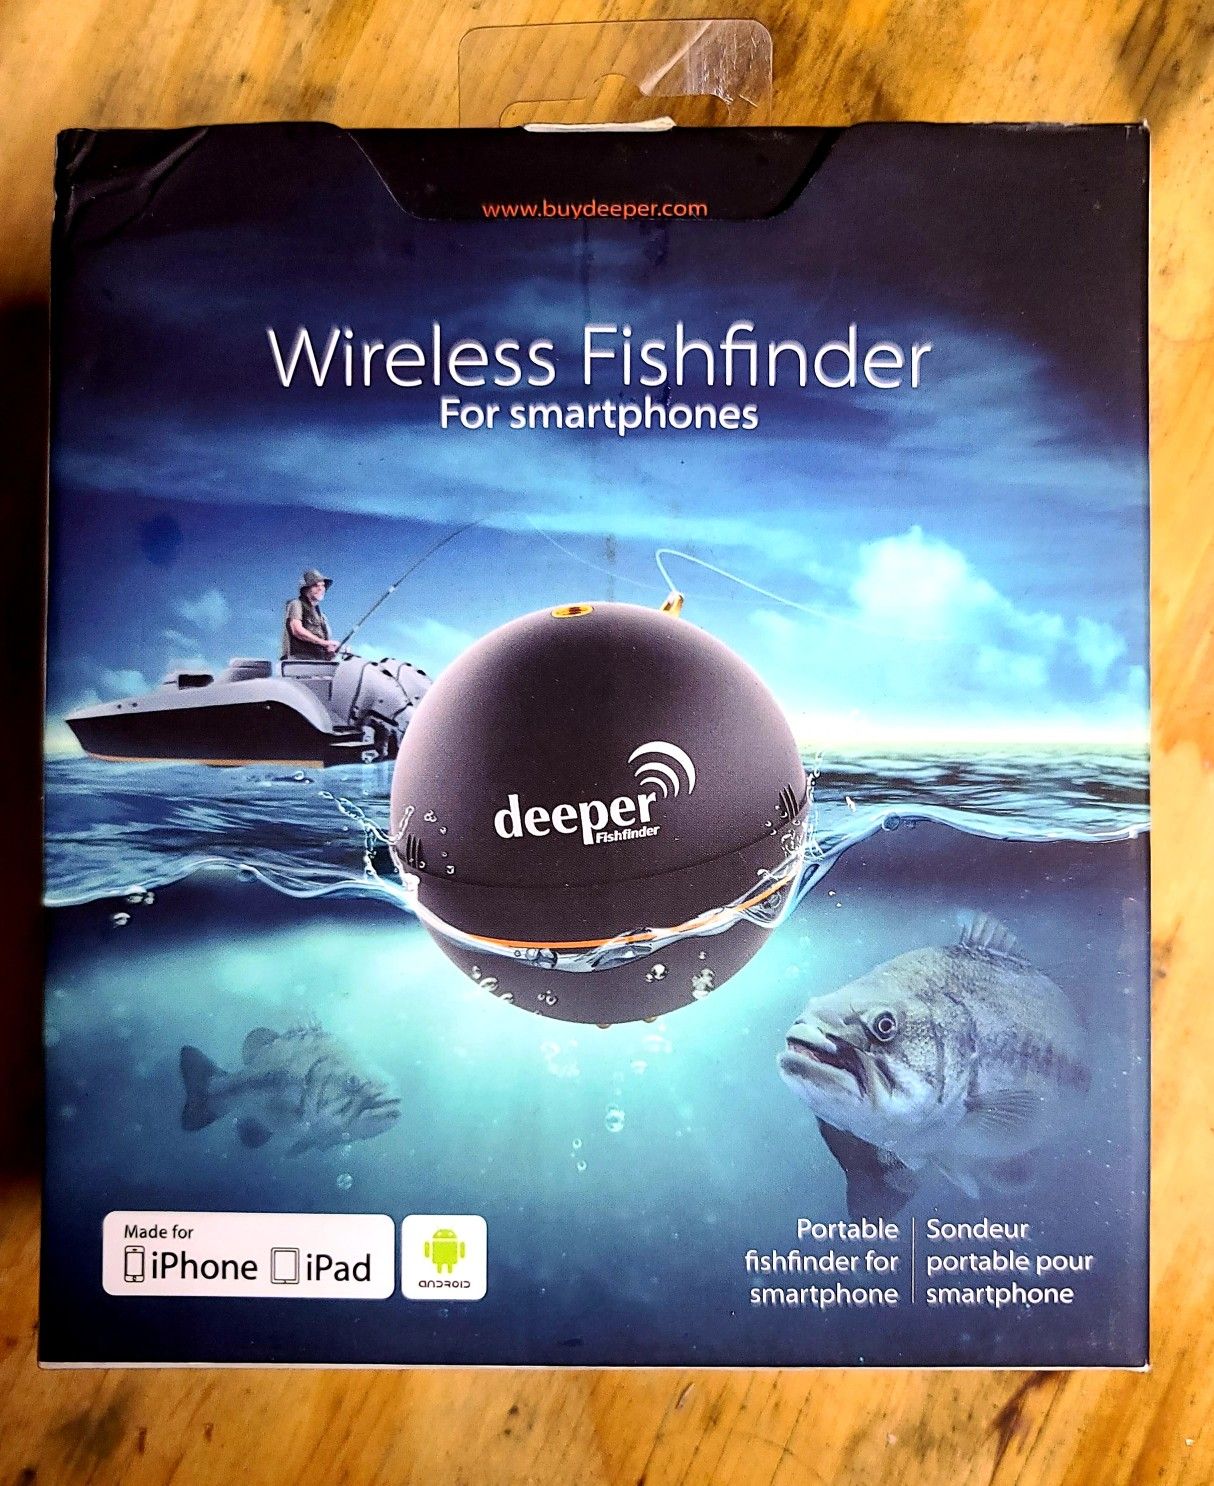 "Deeper" Portable, Castable, Fishfinder